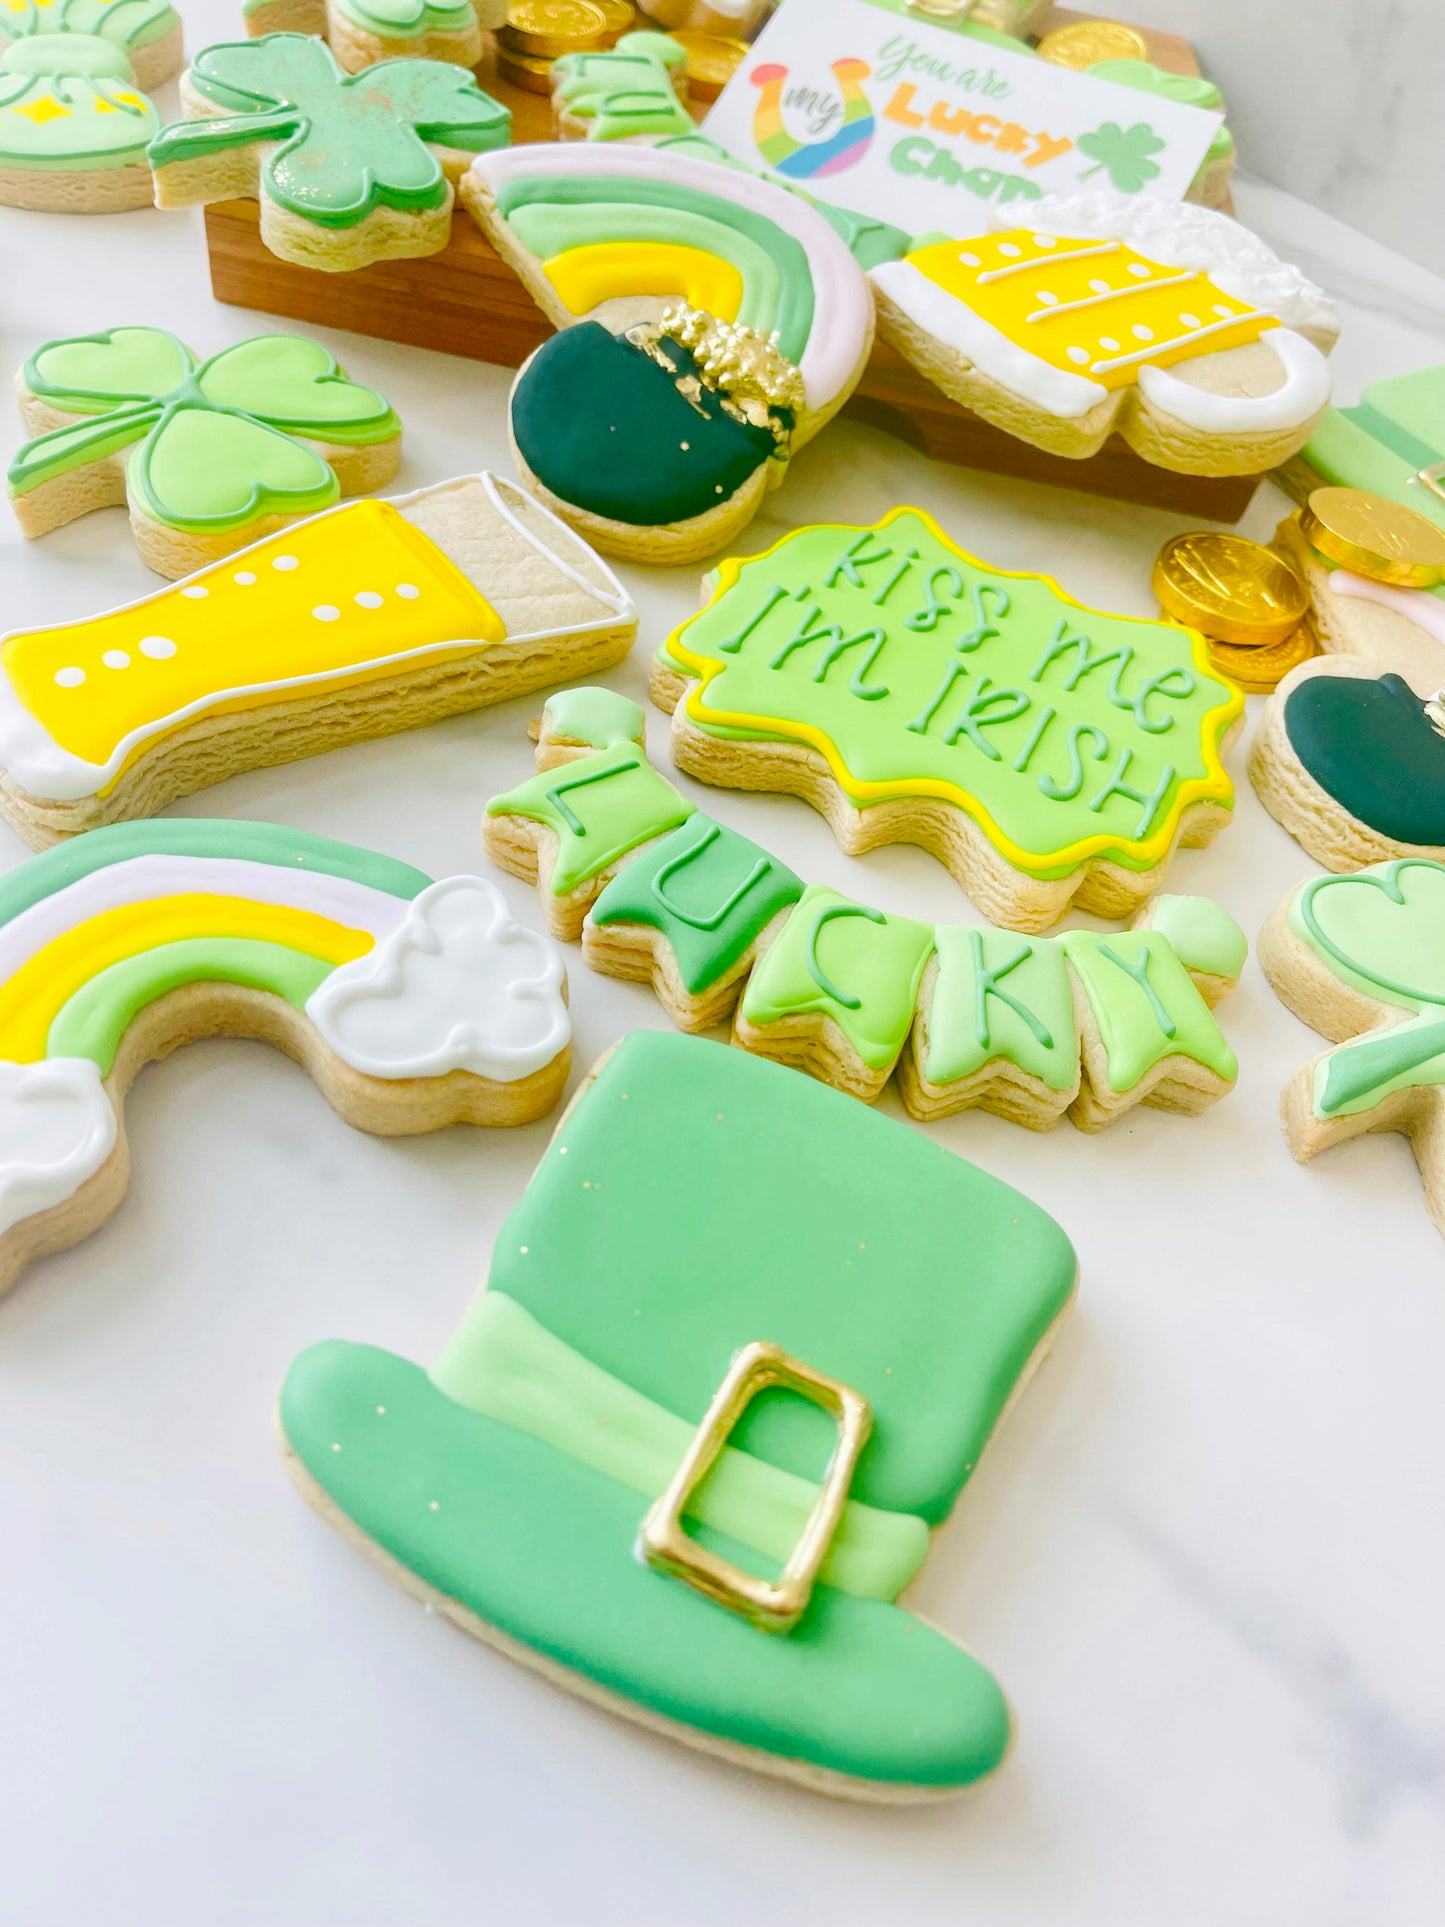 St. Patrick's Day Sugar Cookie Gift Set